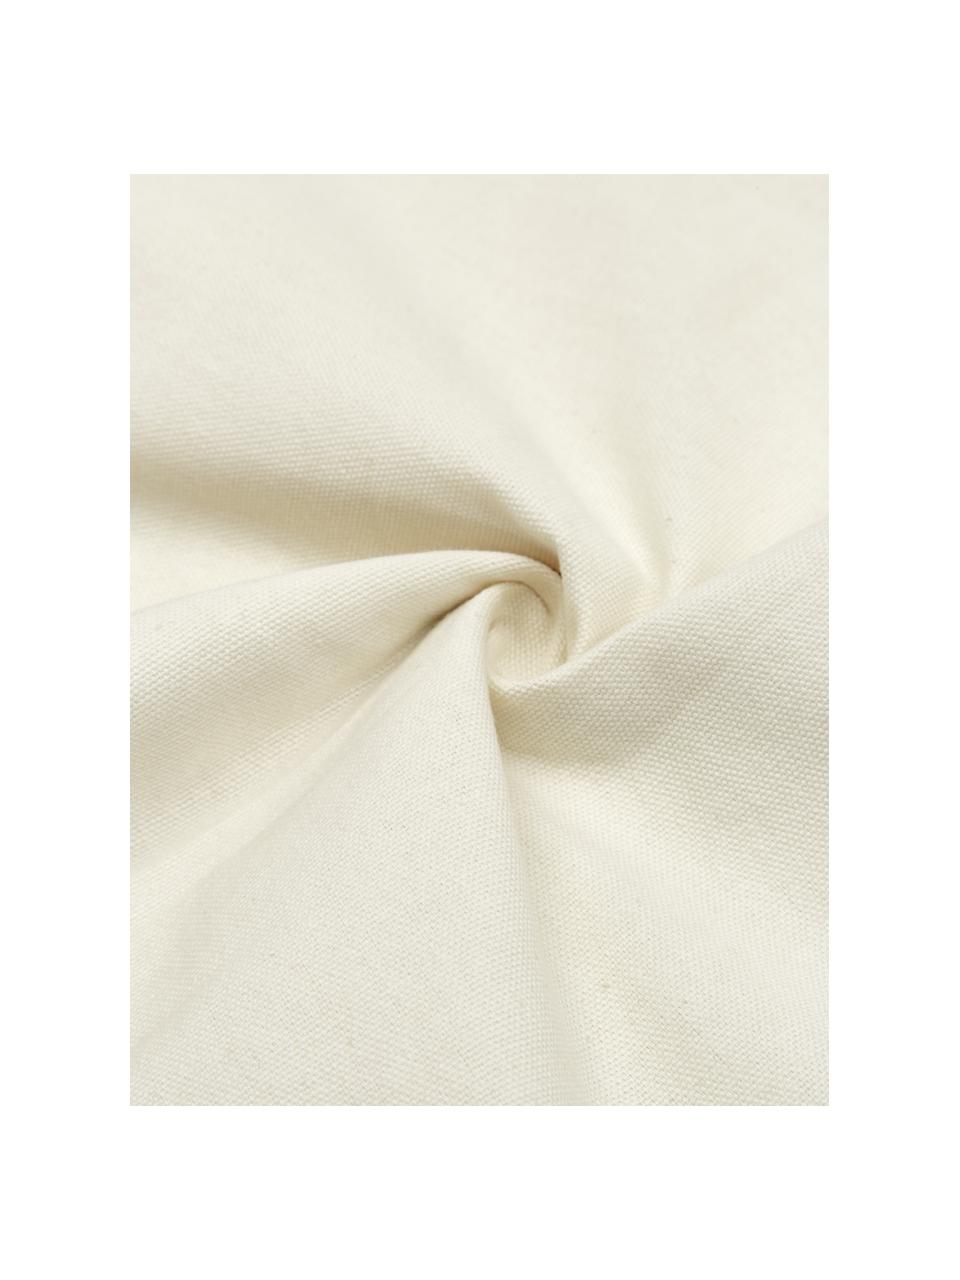 Cojín Quilted, con relleno, Funda: 100% algodón, Blanco crudo, dorado, An 45 x L 45 cm